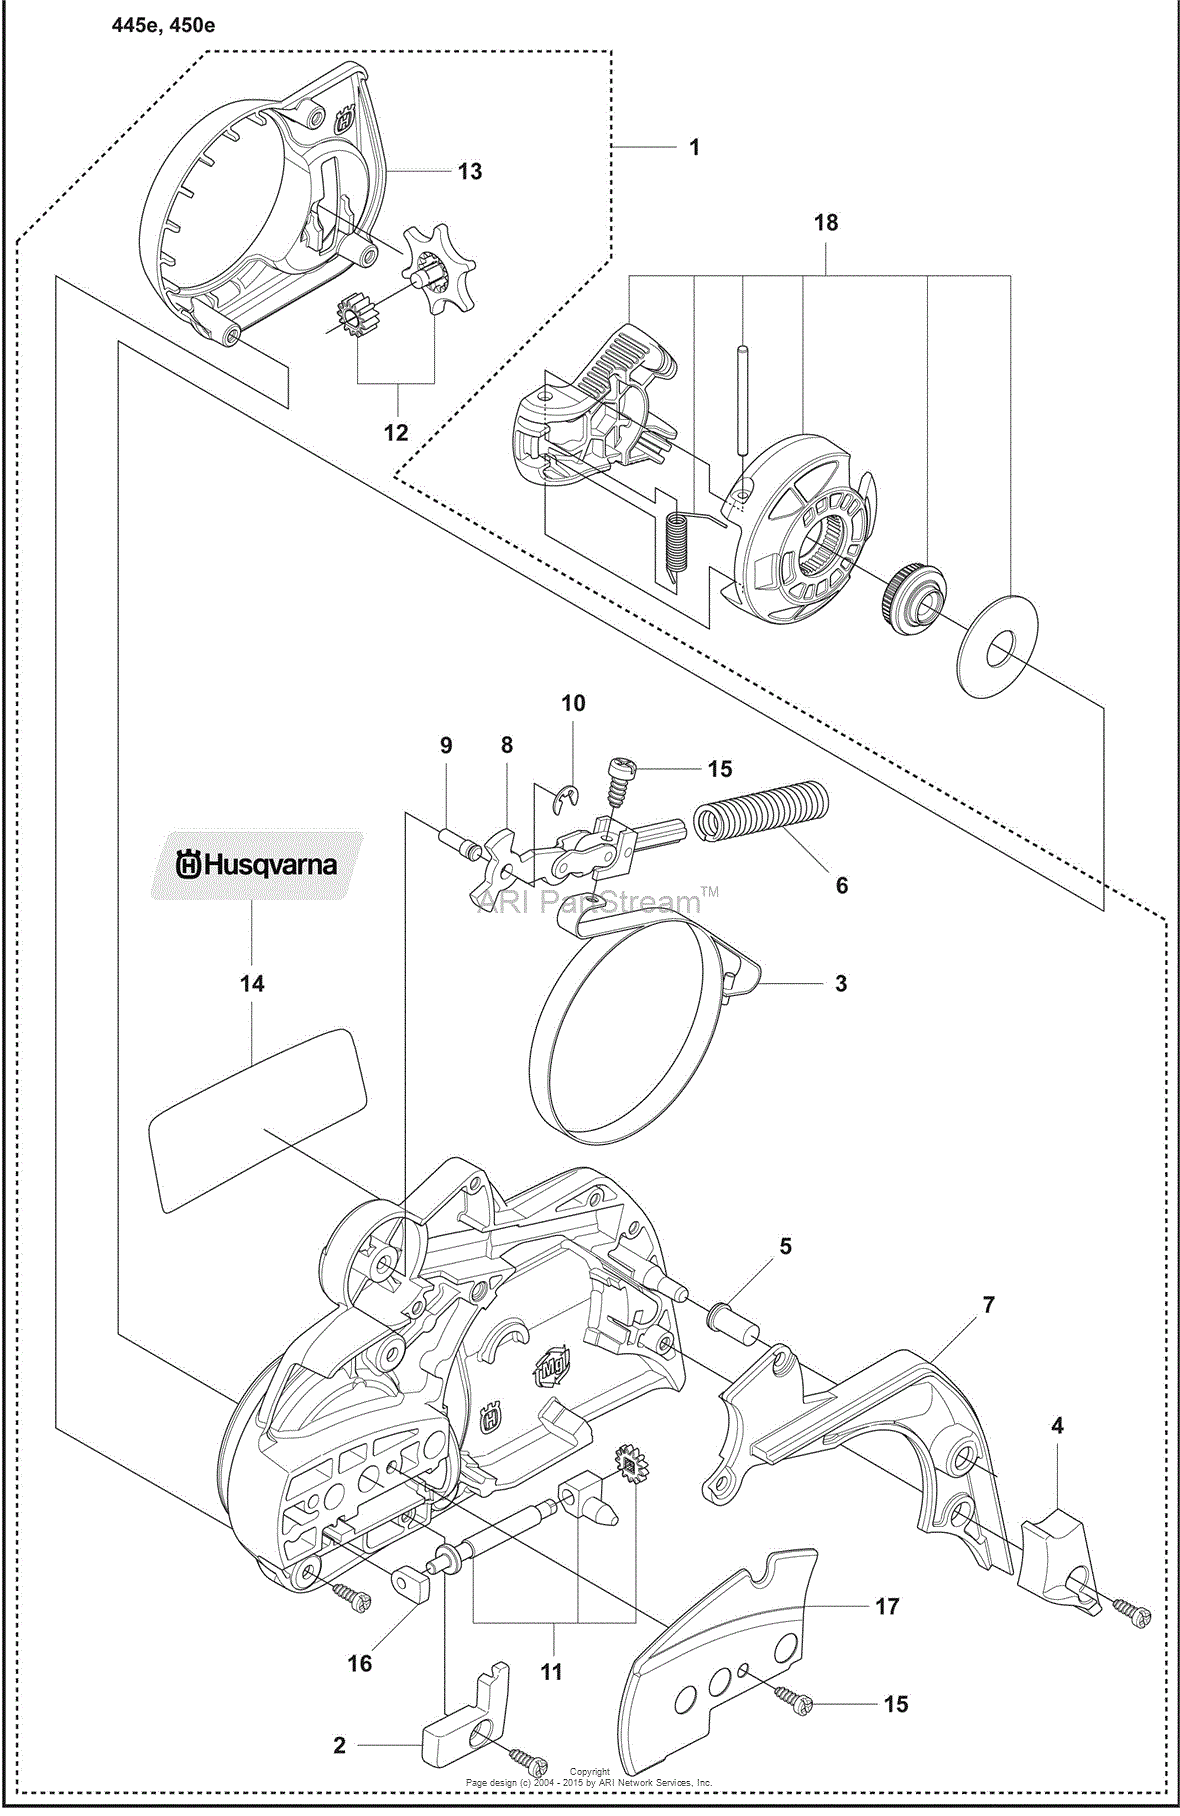 Husqvarna 450 e (2007-03) Parts Diagram for Chainbrake / Tool-less